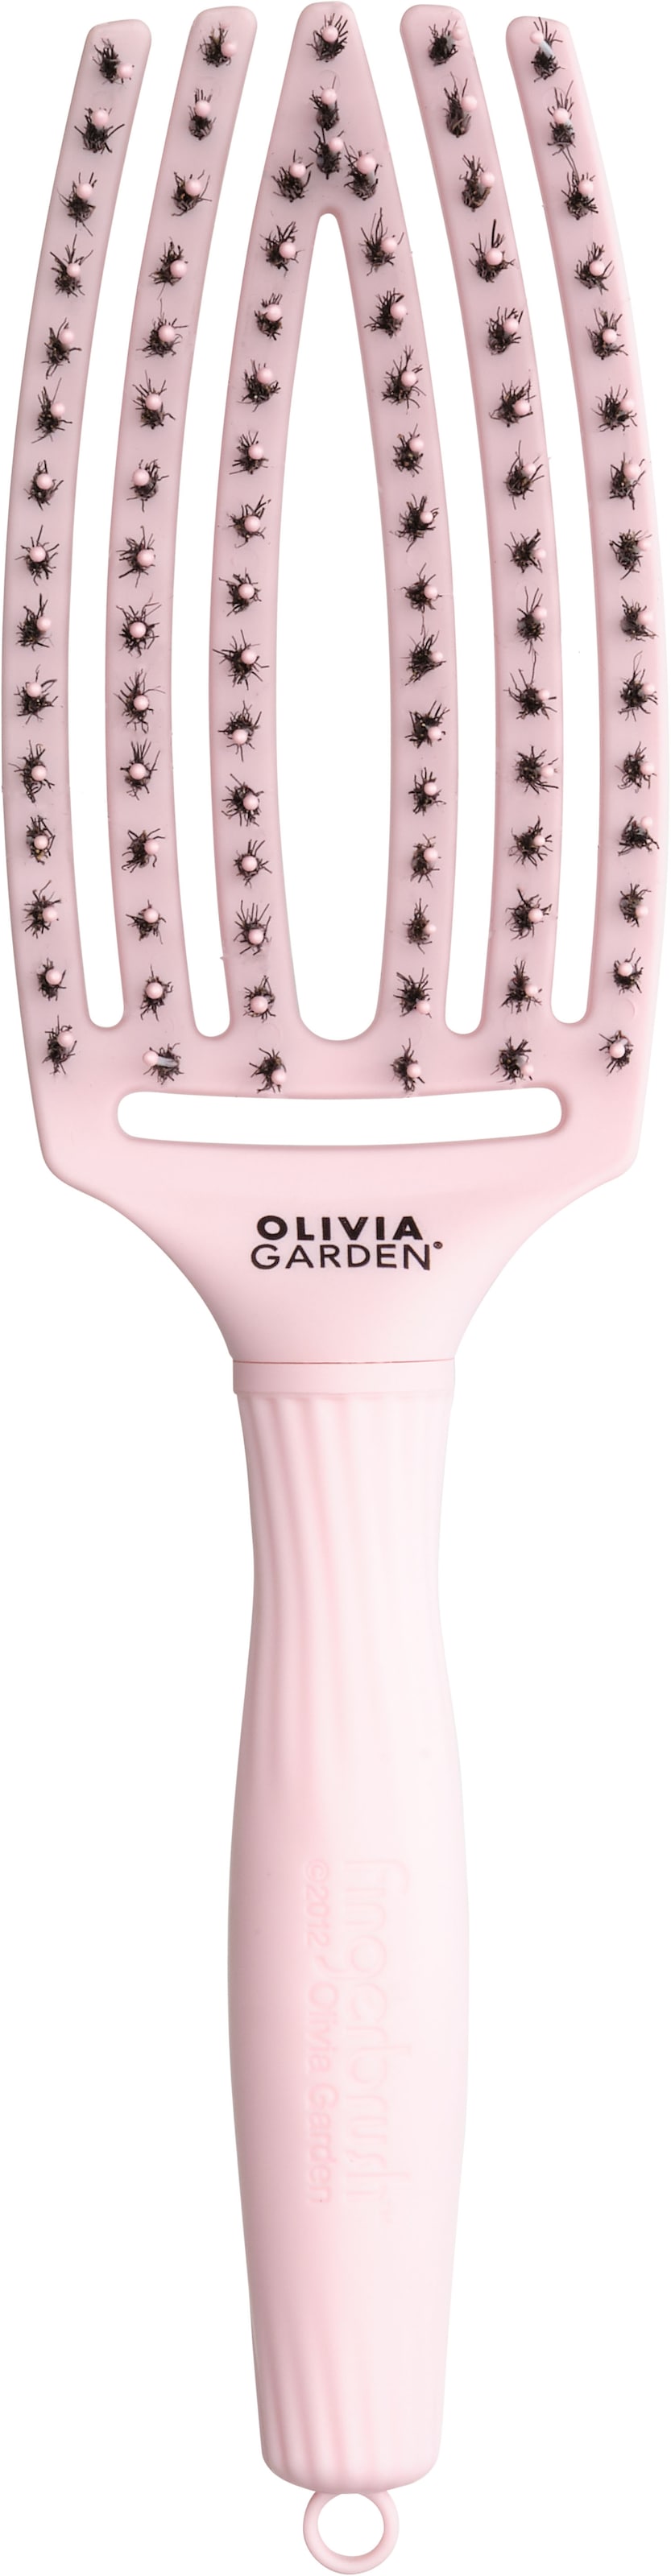 Haarentwirrbürste OLIVIA Combo kaufen »Fingerbrush medium« GARDEN Pink